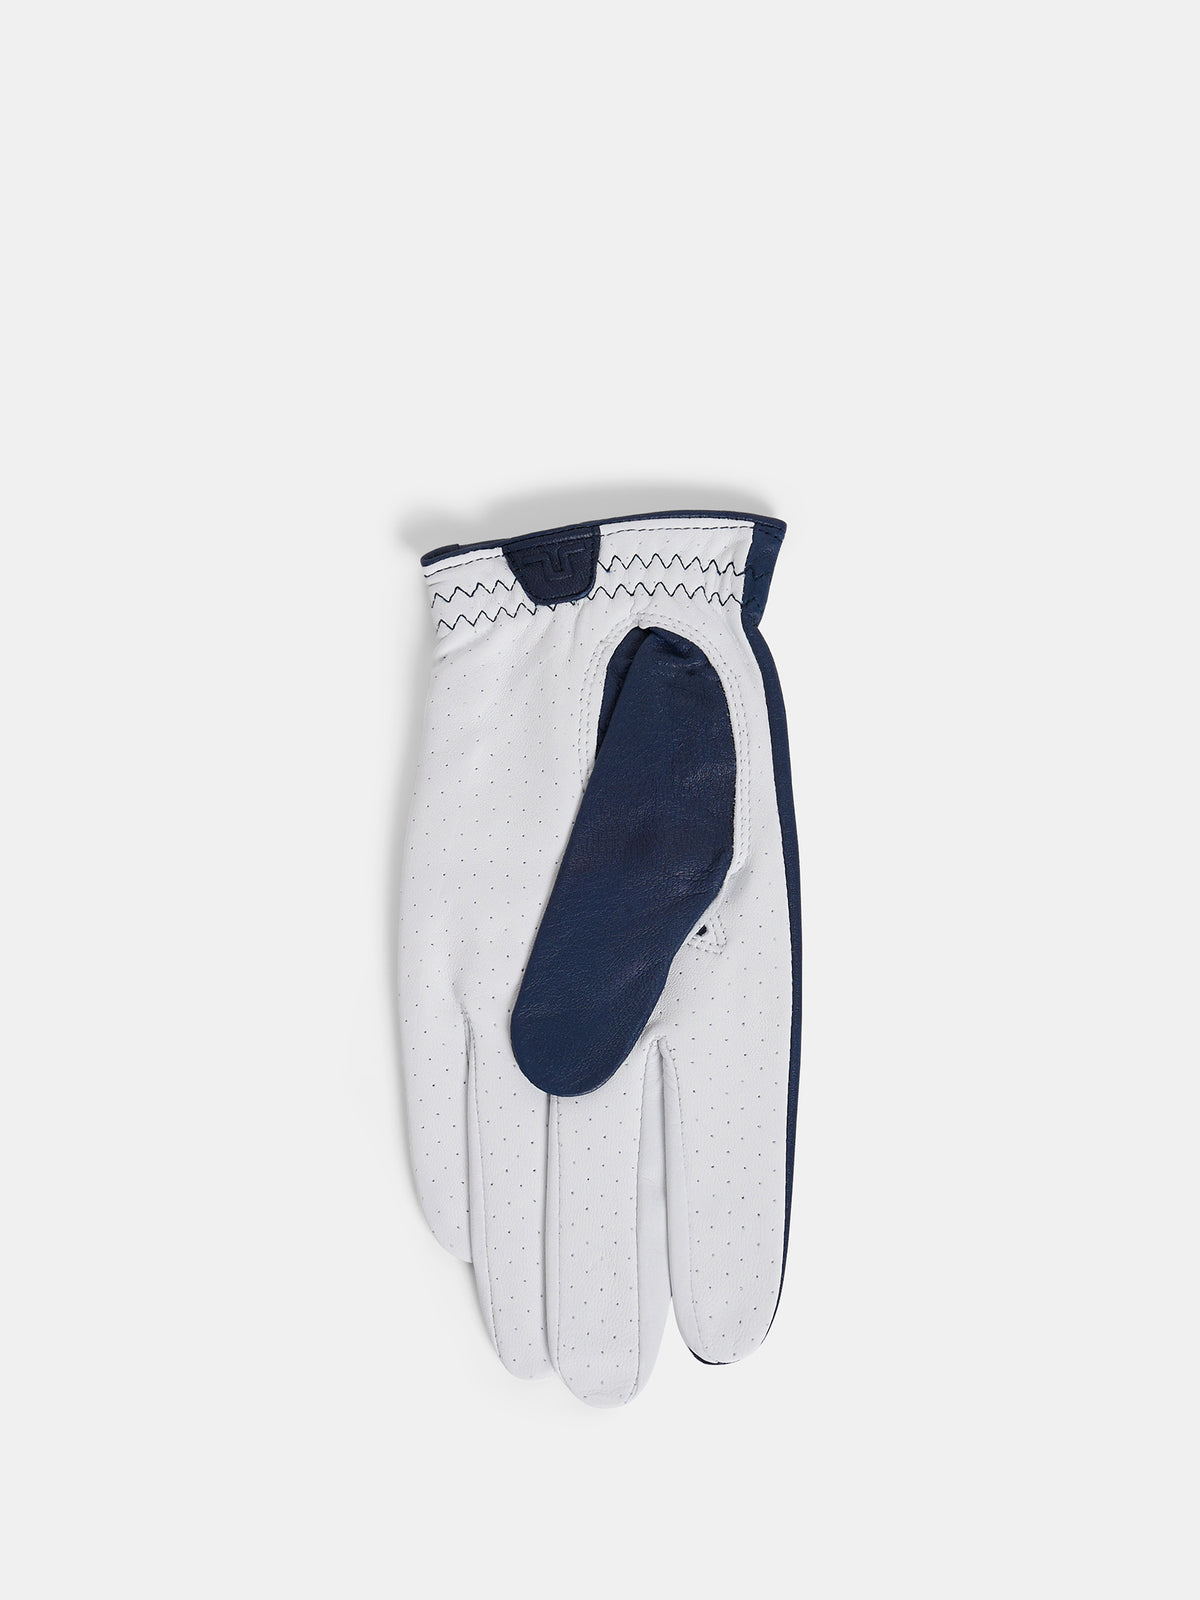 Ron Leather Golf Glove A / JL Navy